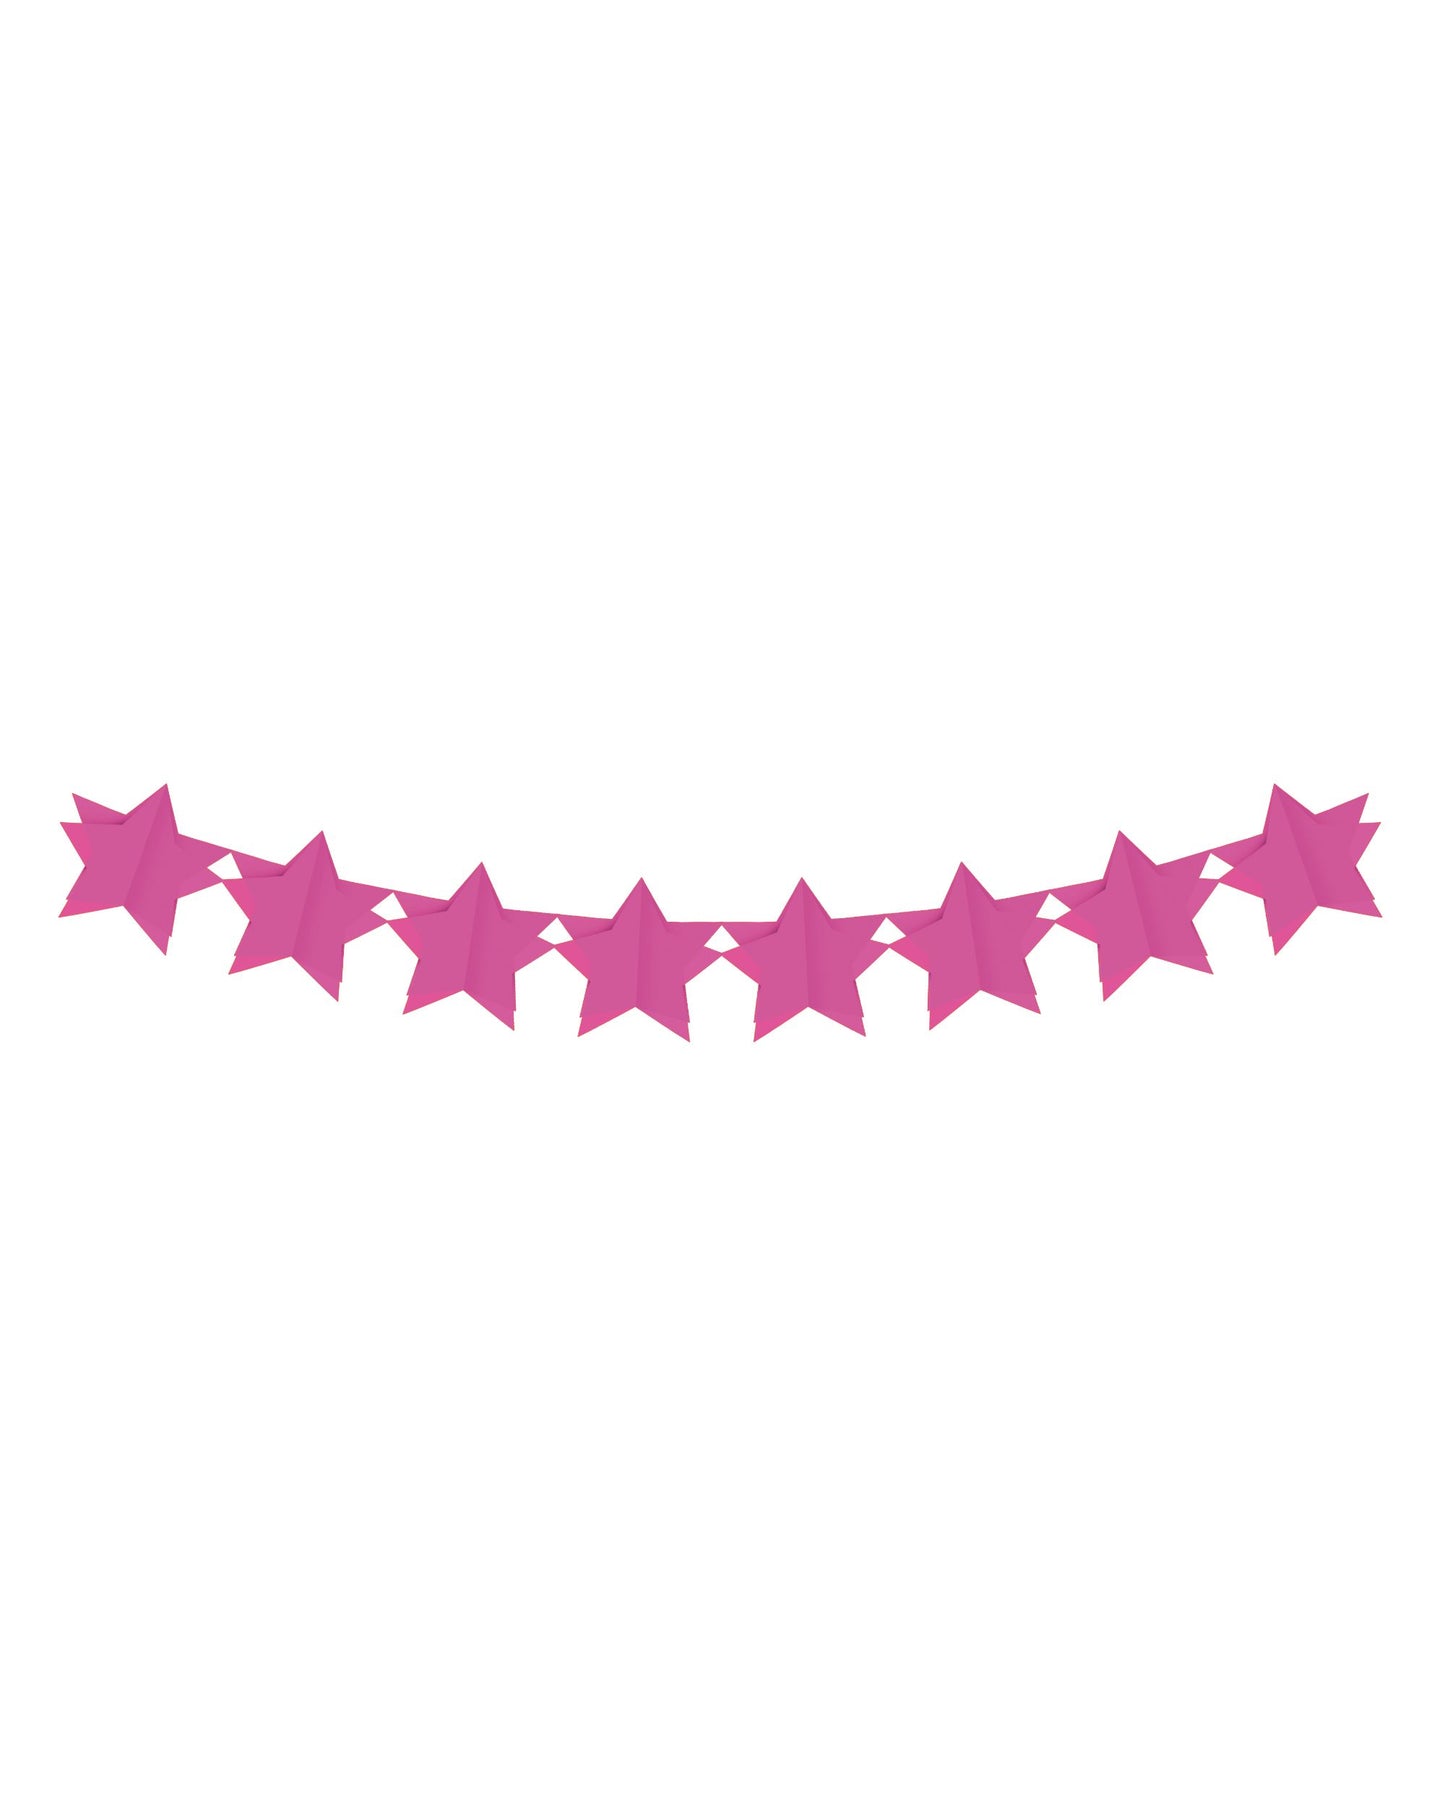 Guirlanda estrela pink